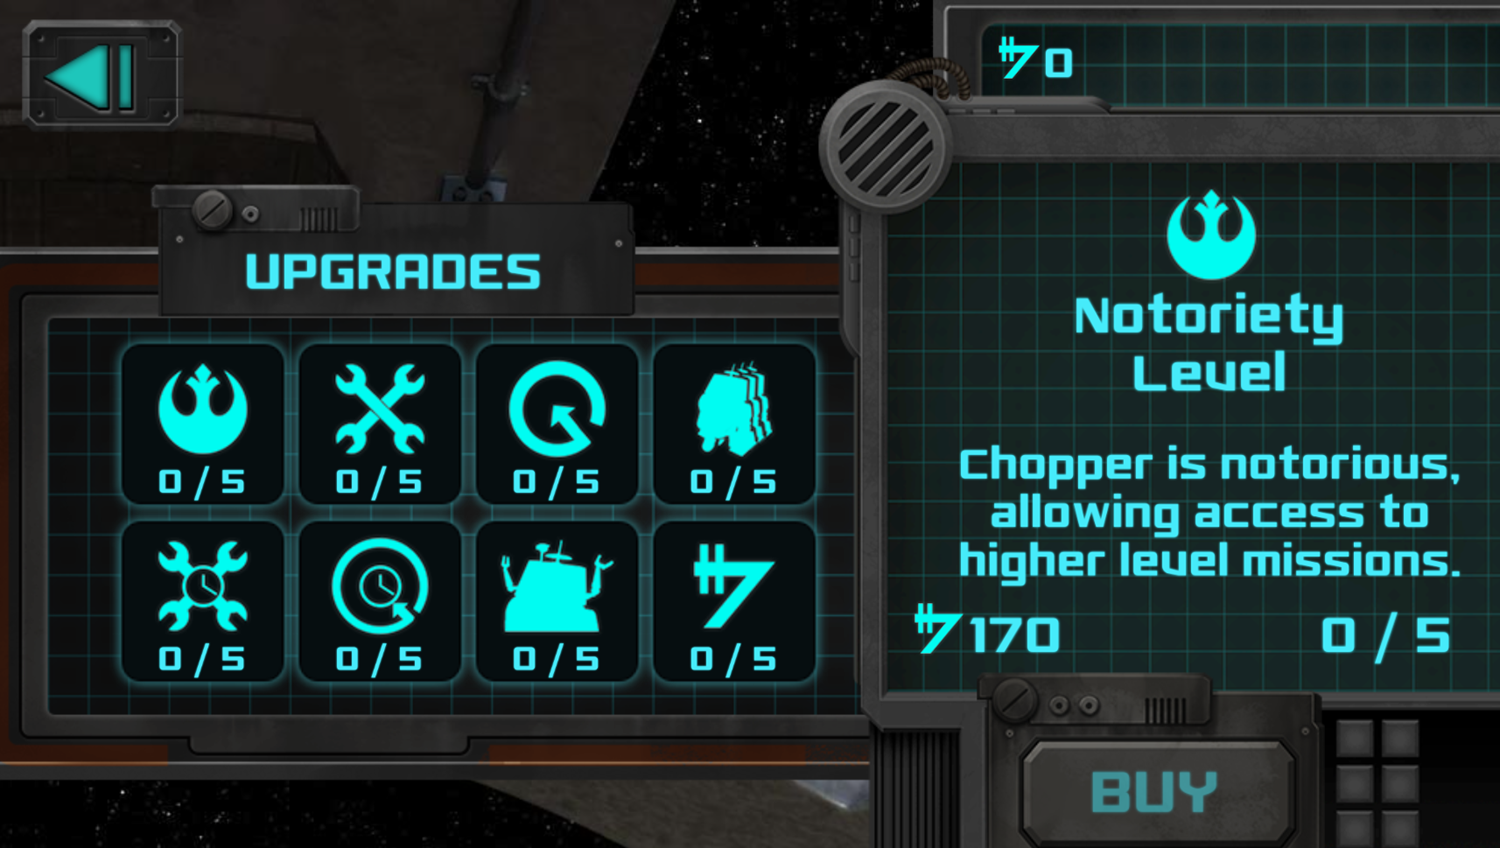 Star Wars Rebels Chopper Chase Game Upgrades Screenshot.